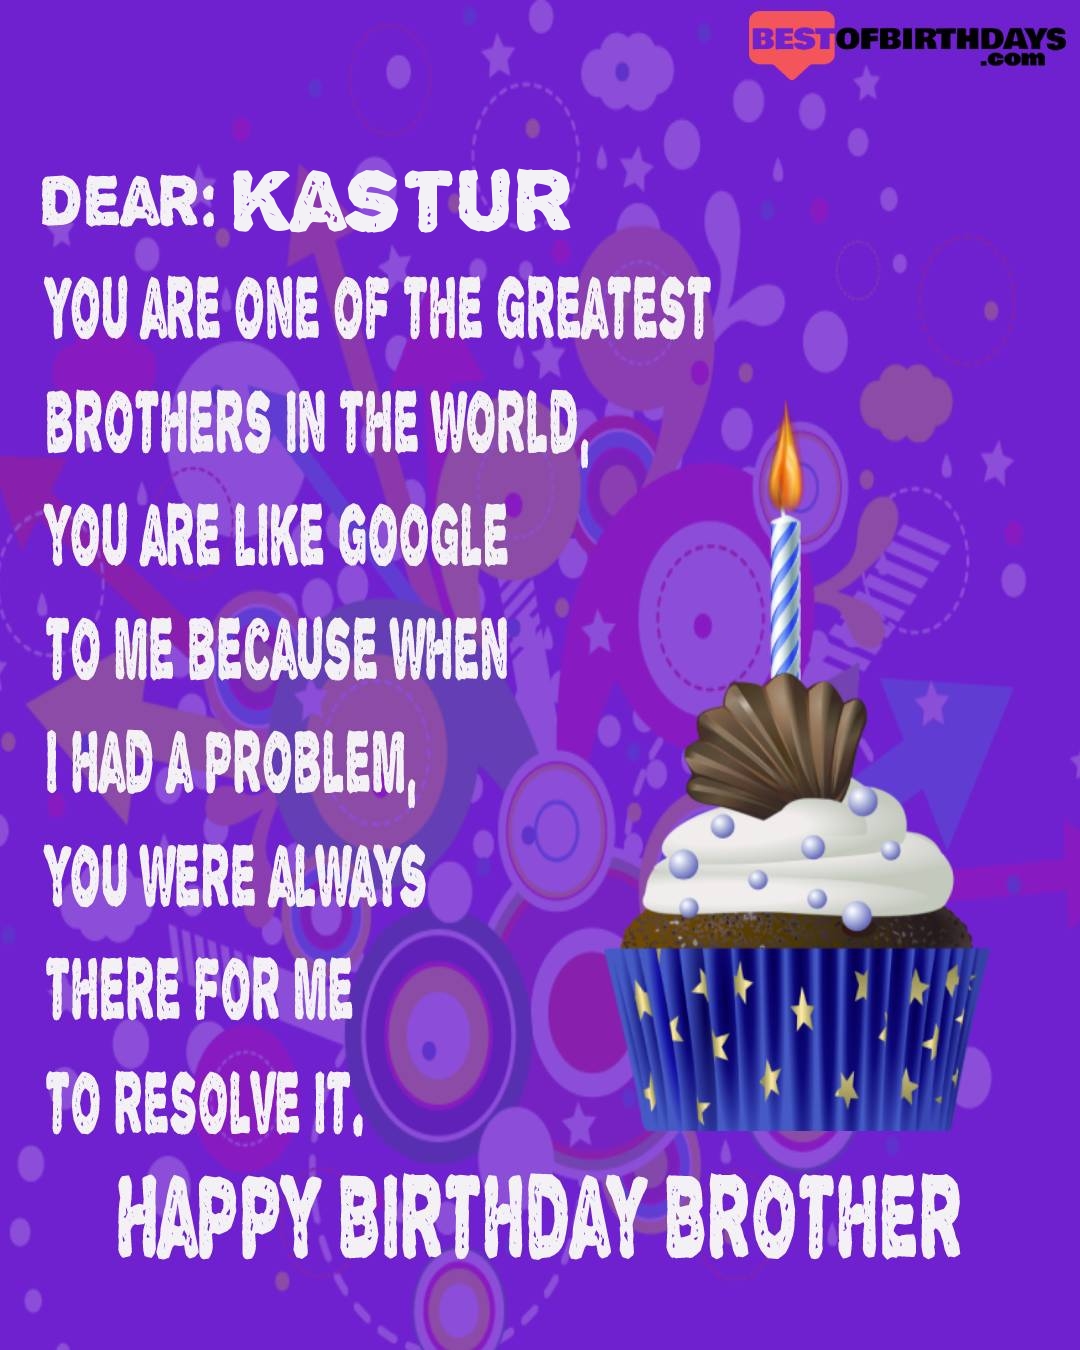 Happy birthday kastur bhai brother bro